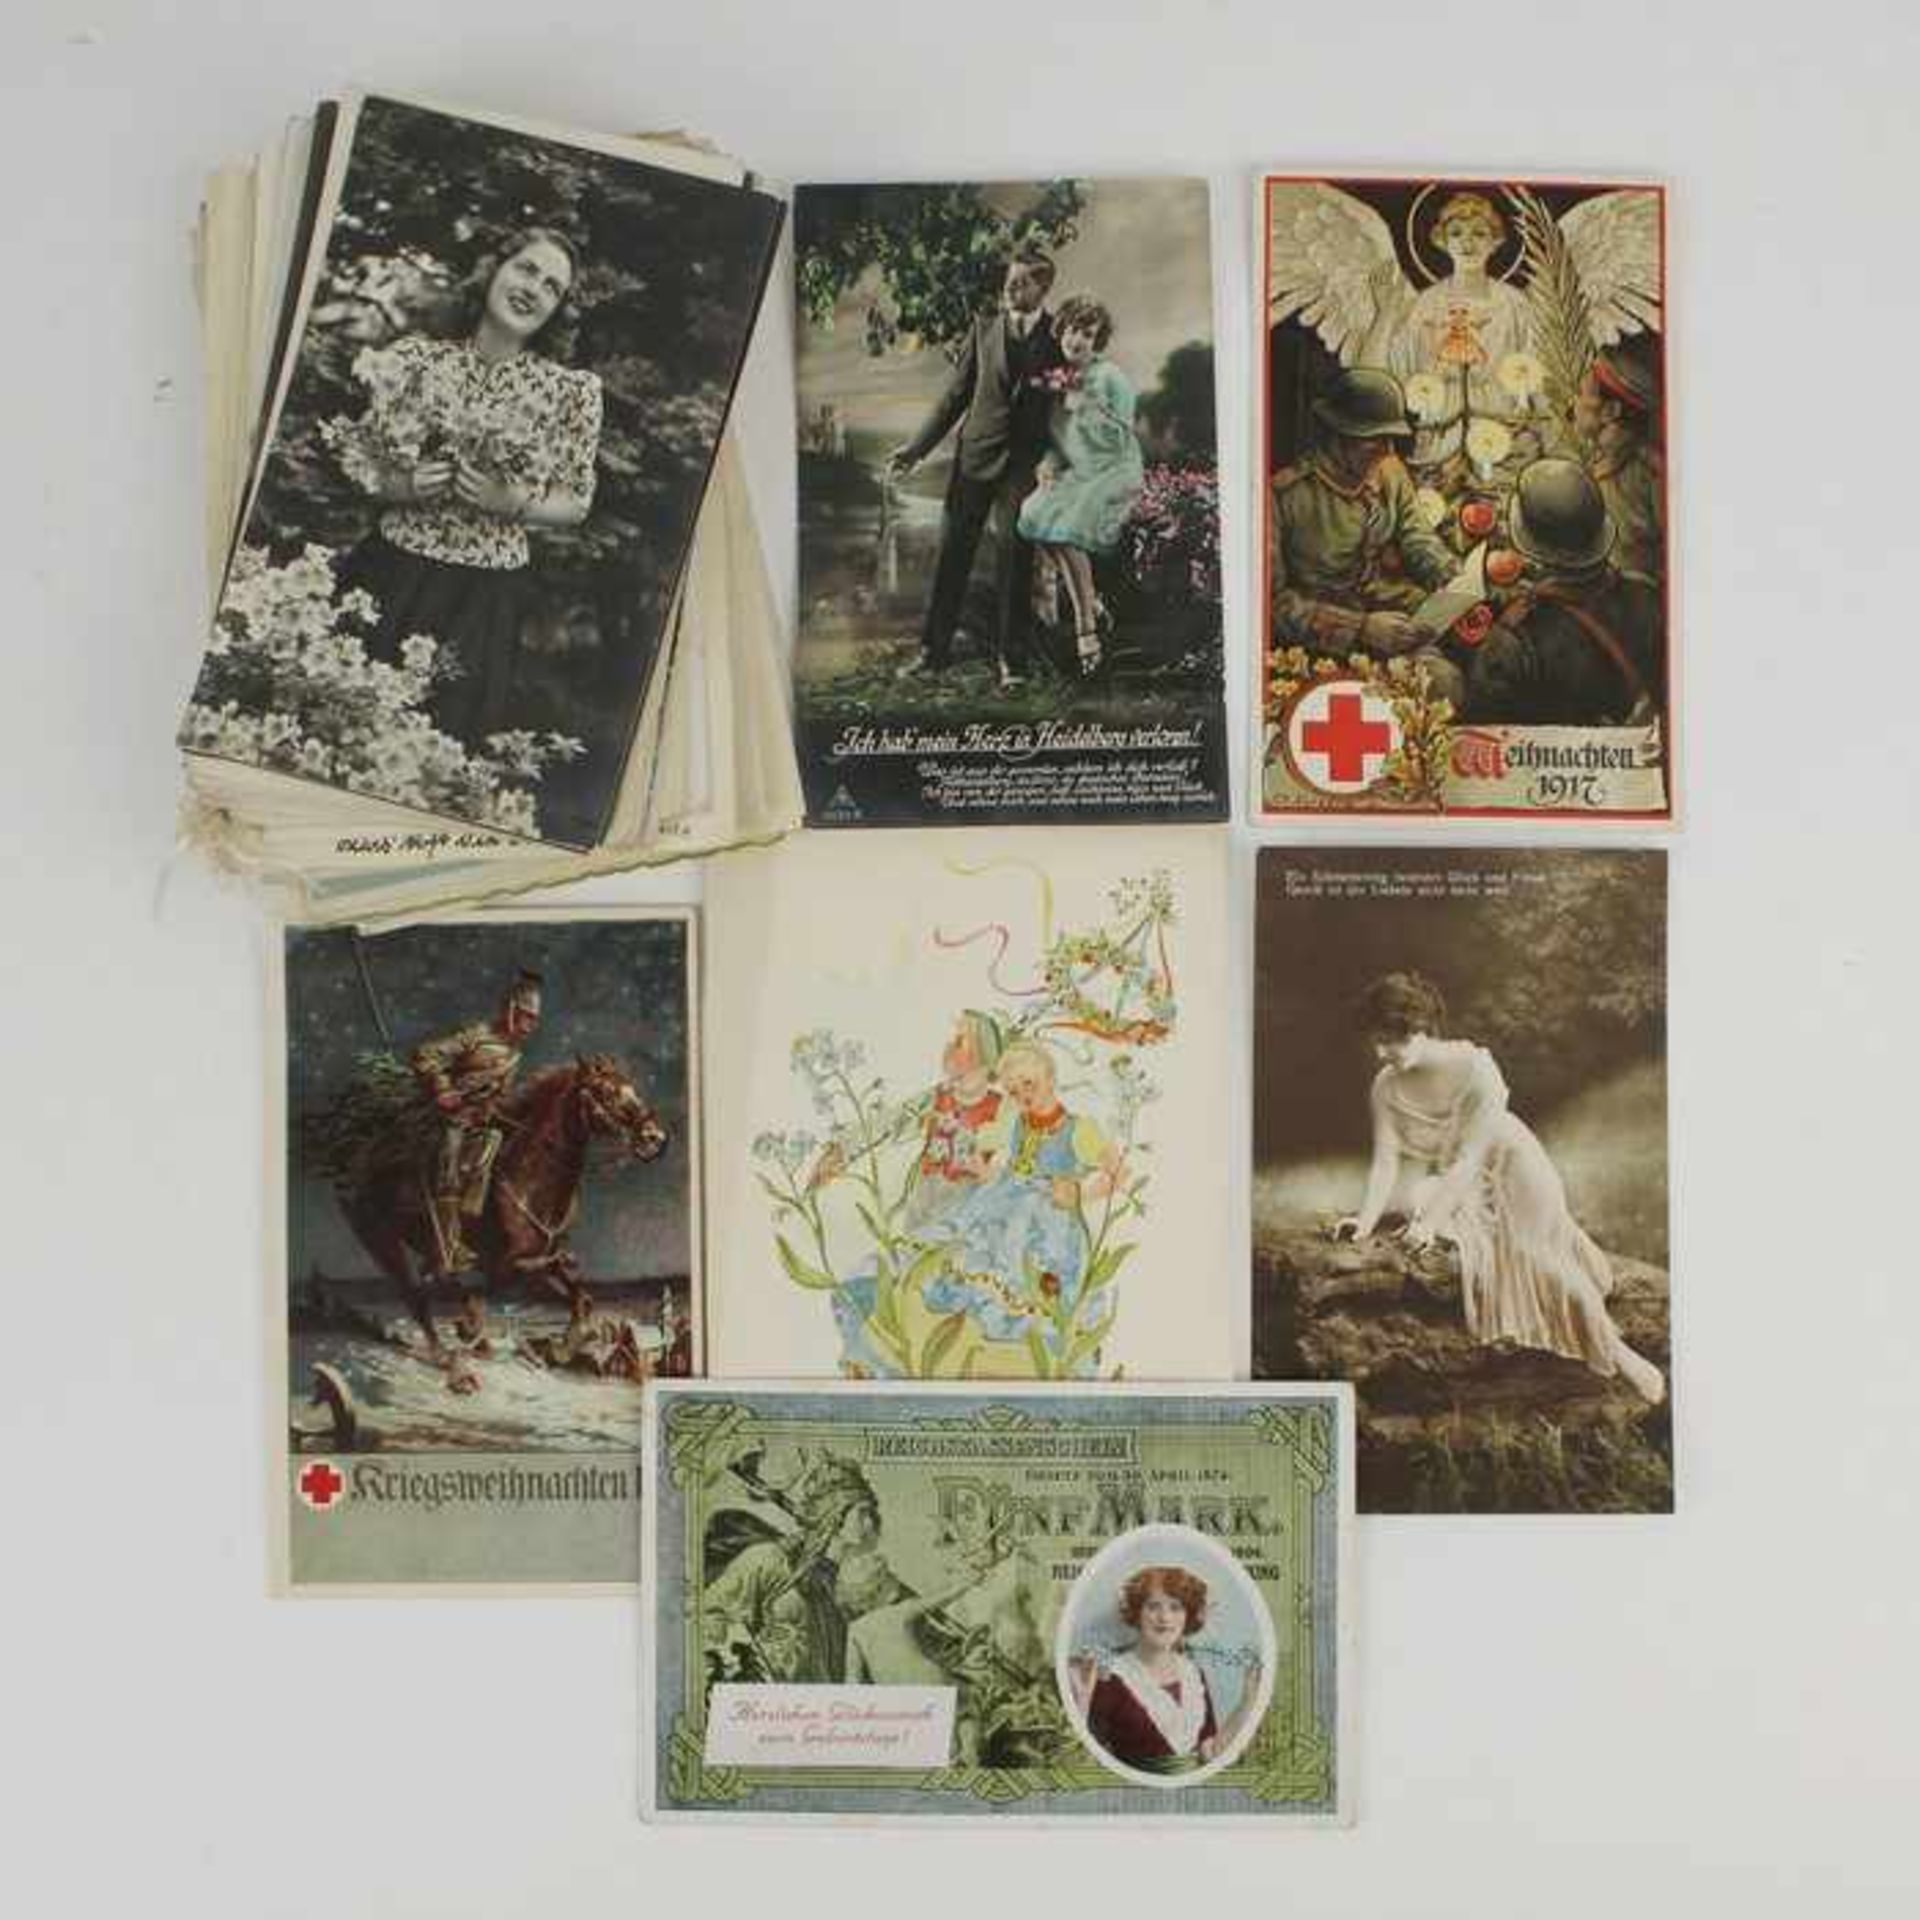 Postkarten - Glückwunschkartenab ca. 1910, ca. 50 St., s./w. u. farb. lithogr., Glückwunsch-,